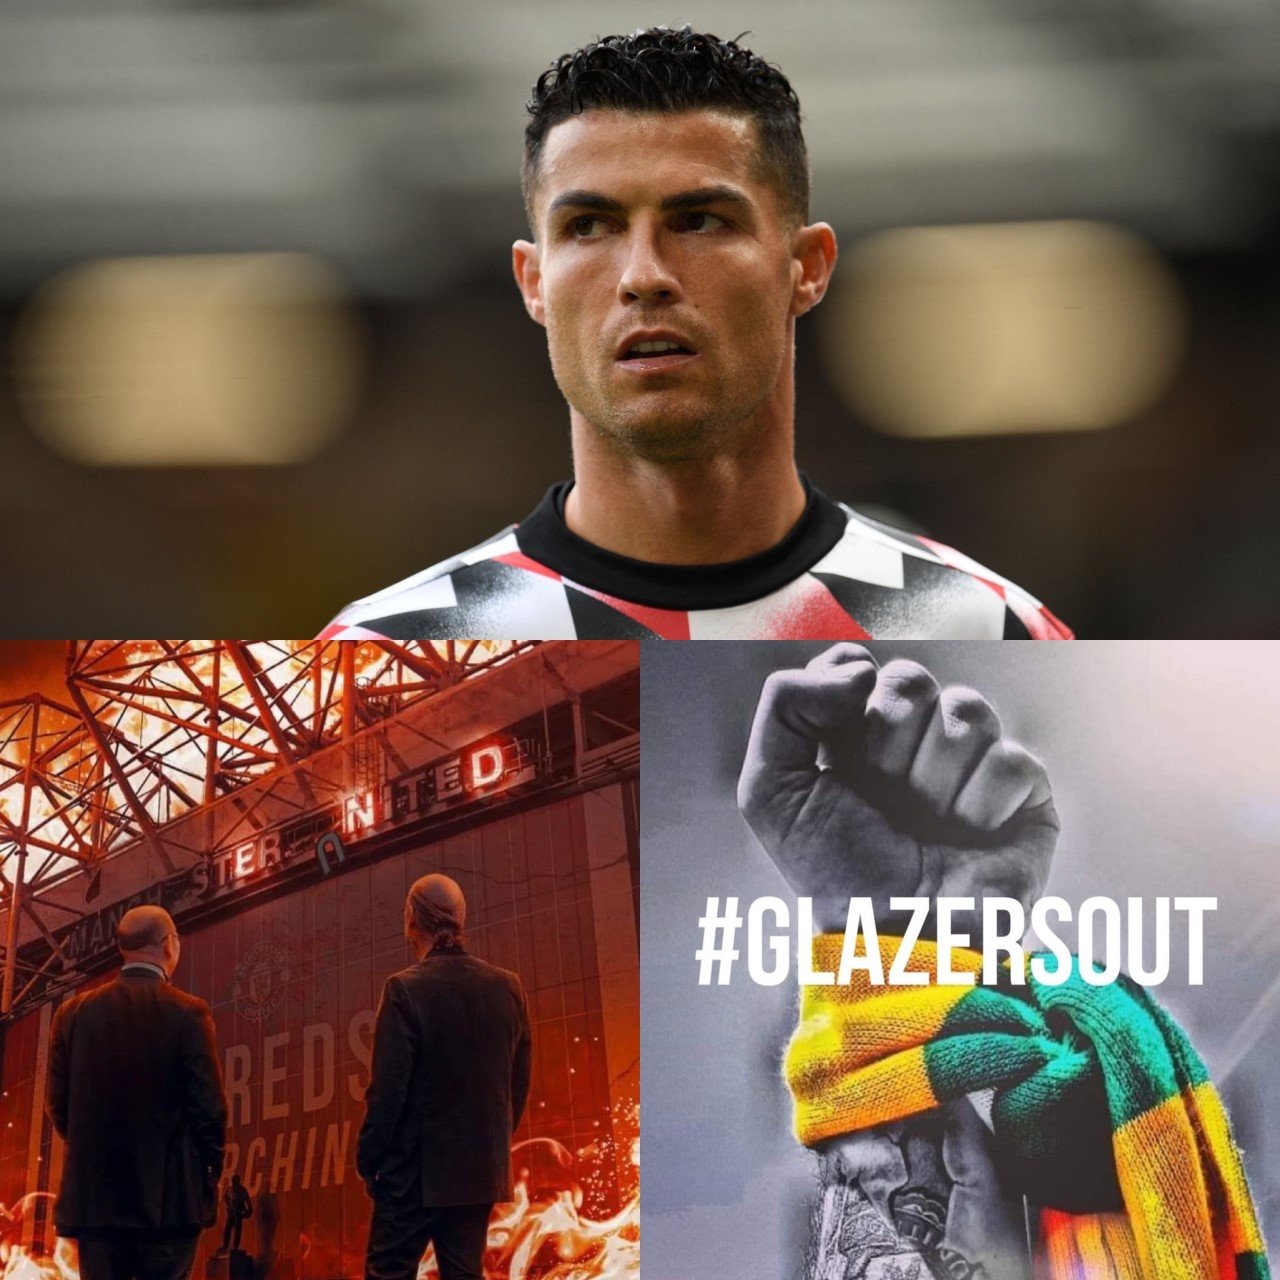 Cristiano Ronaldo claims Glazer family 'don't care' about